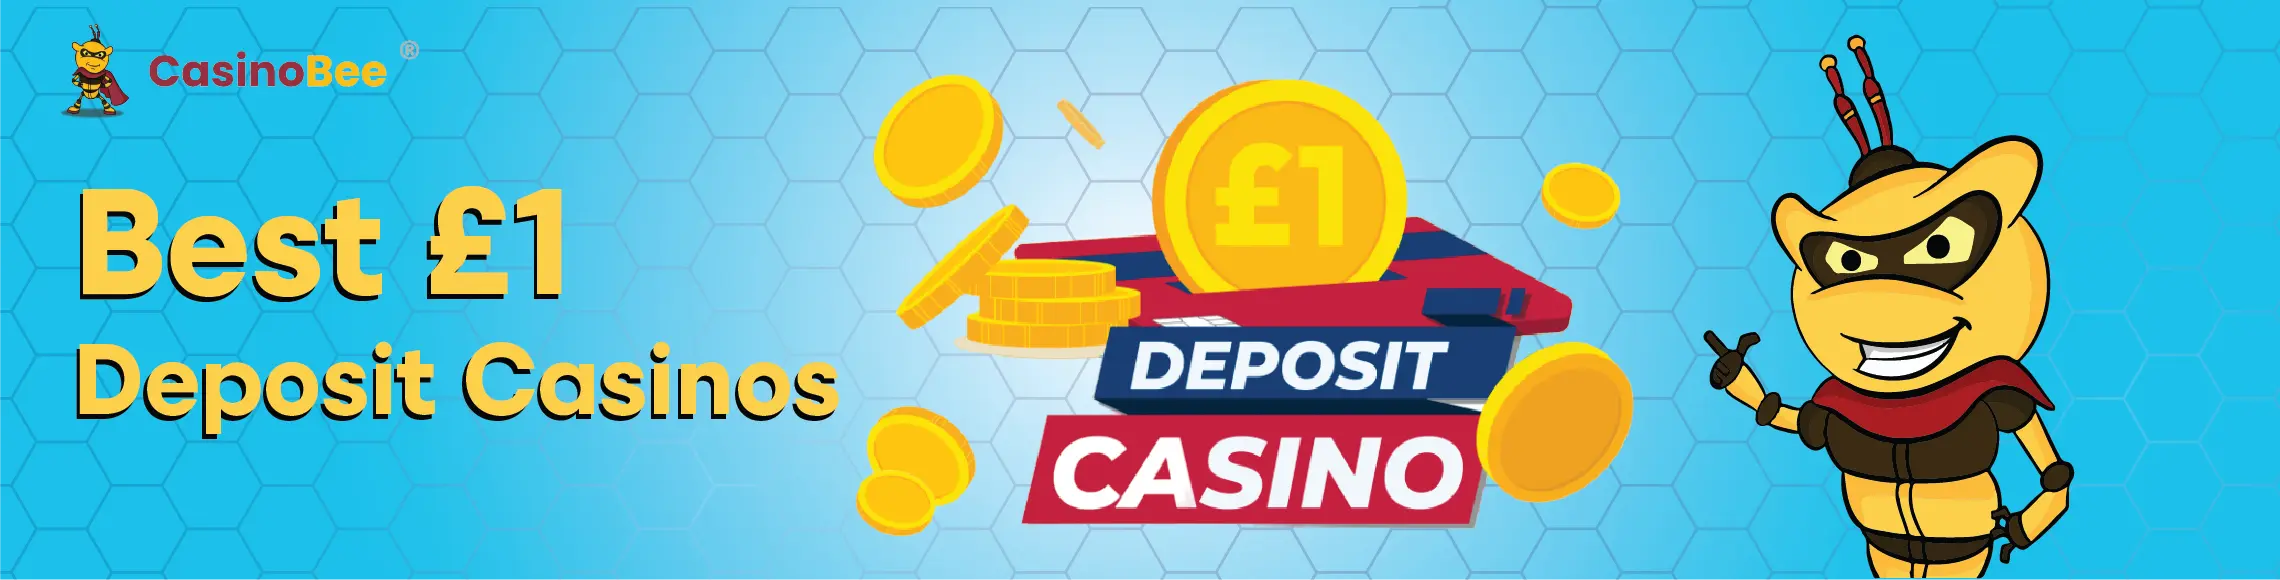 Best £1 Deposit Casinos